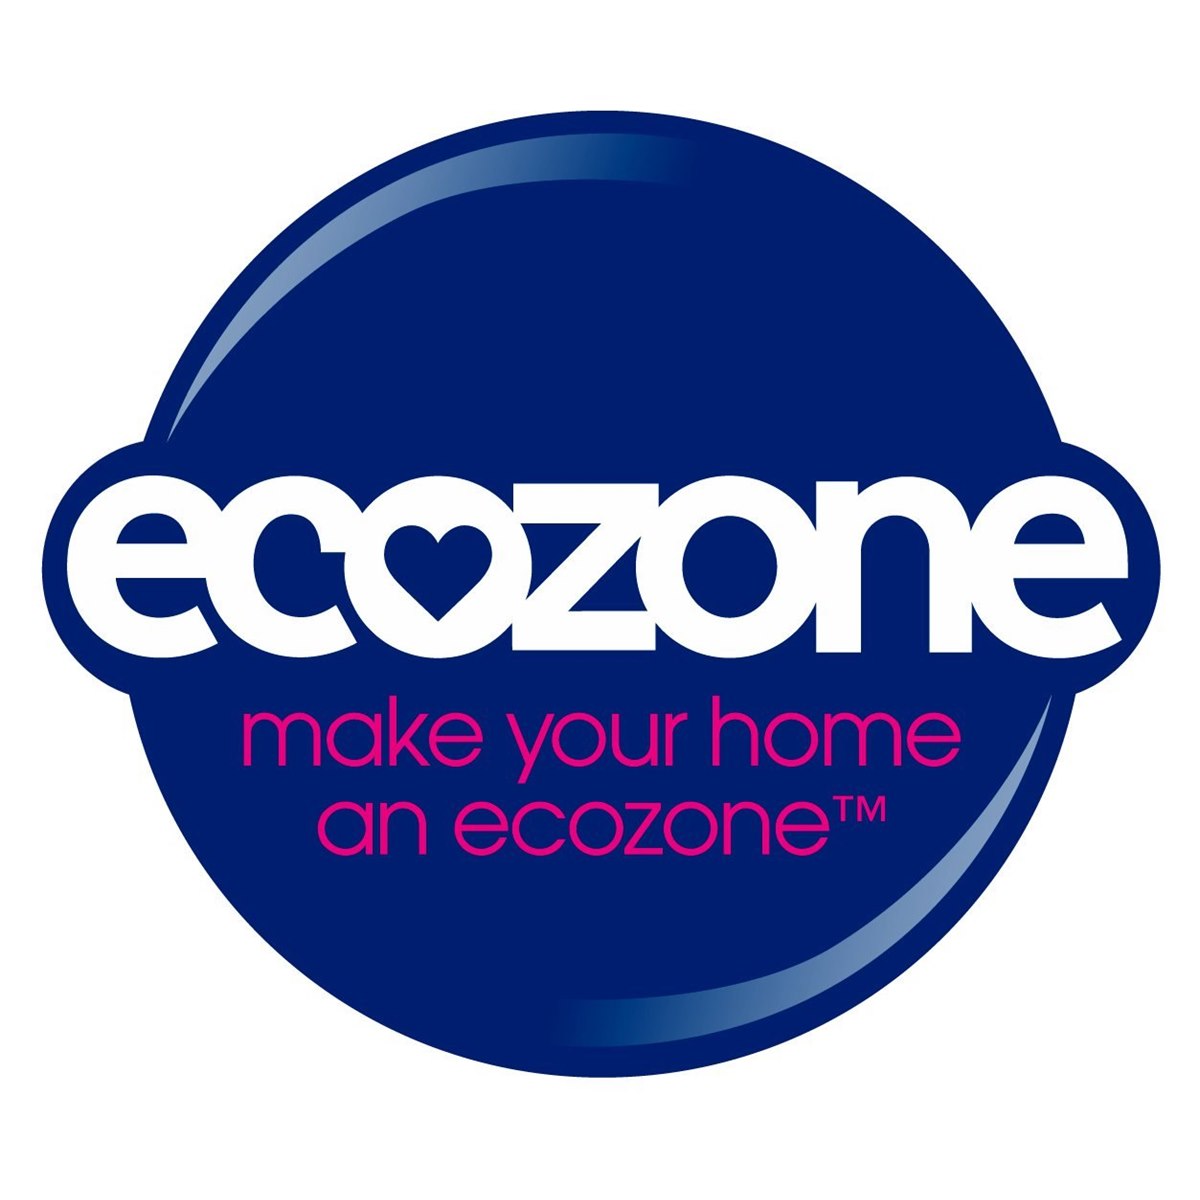 Ecozone Products